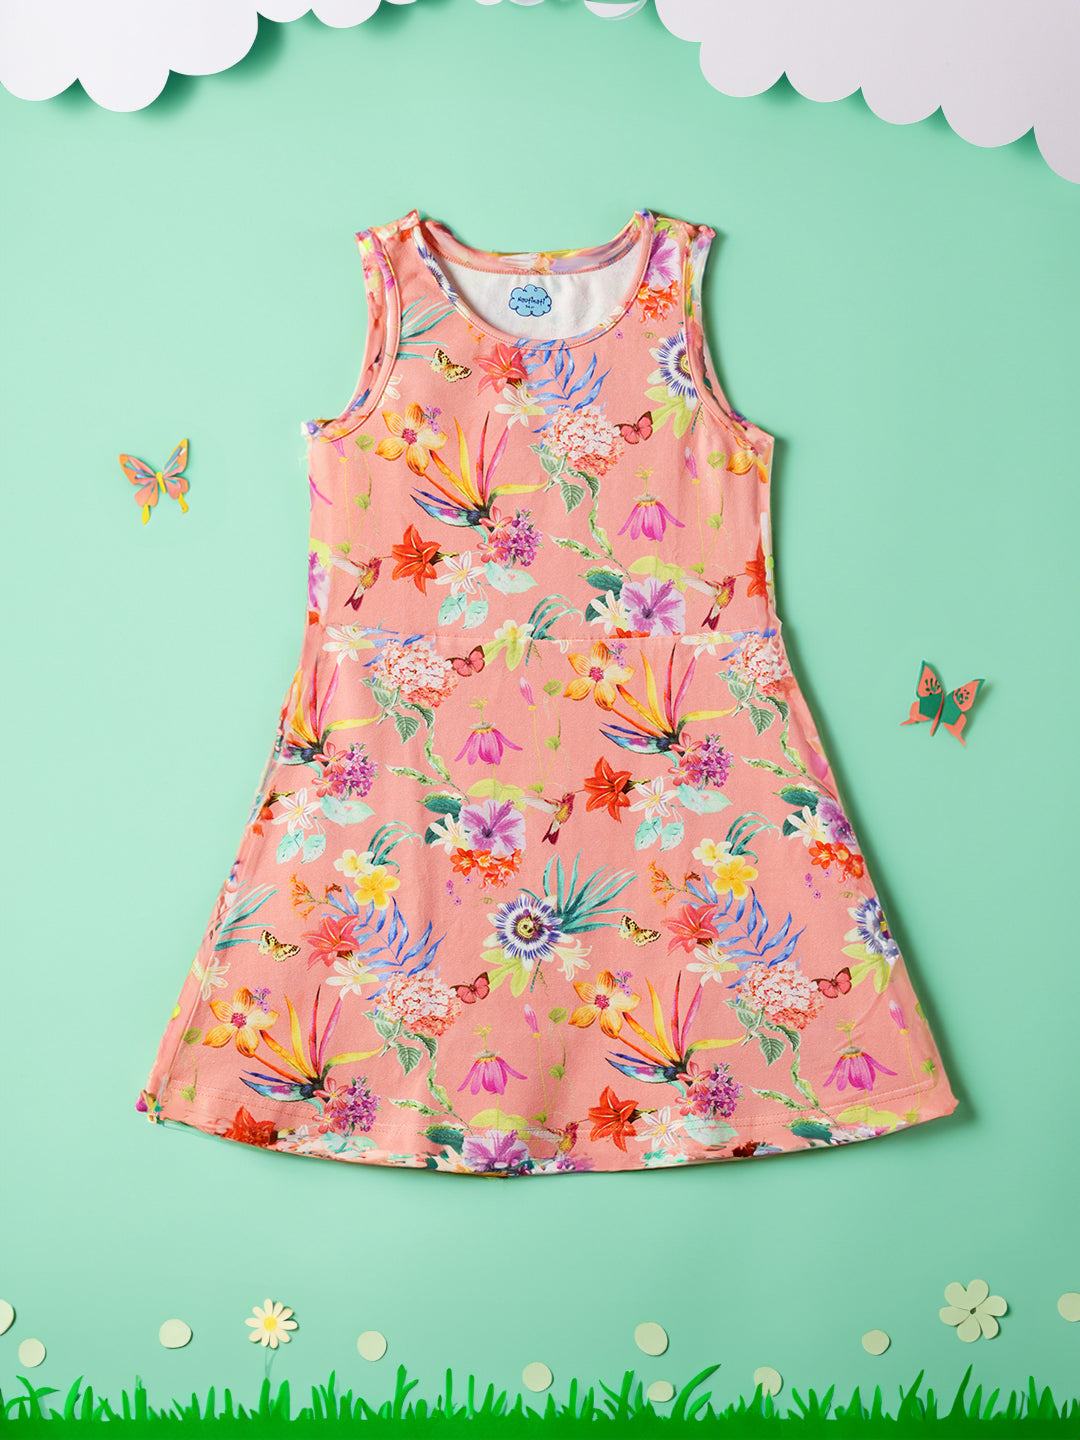 Girls Peach Floral Printed Sleeveless Round Neck A-Line Dress